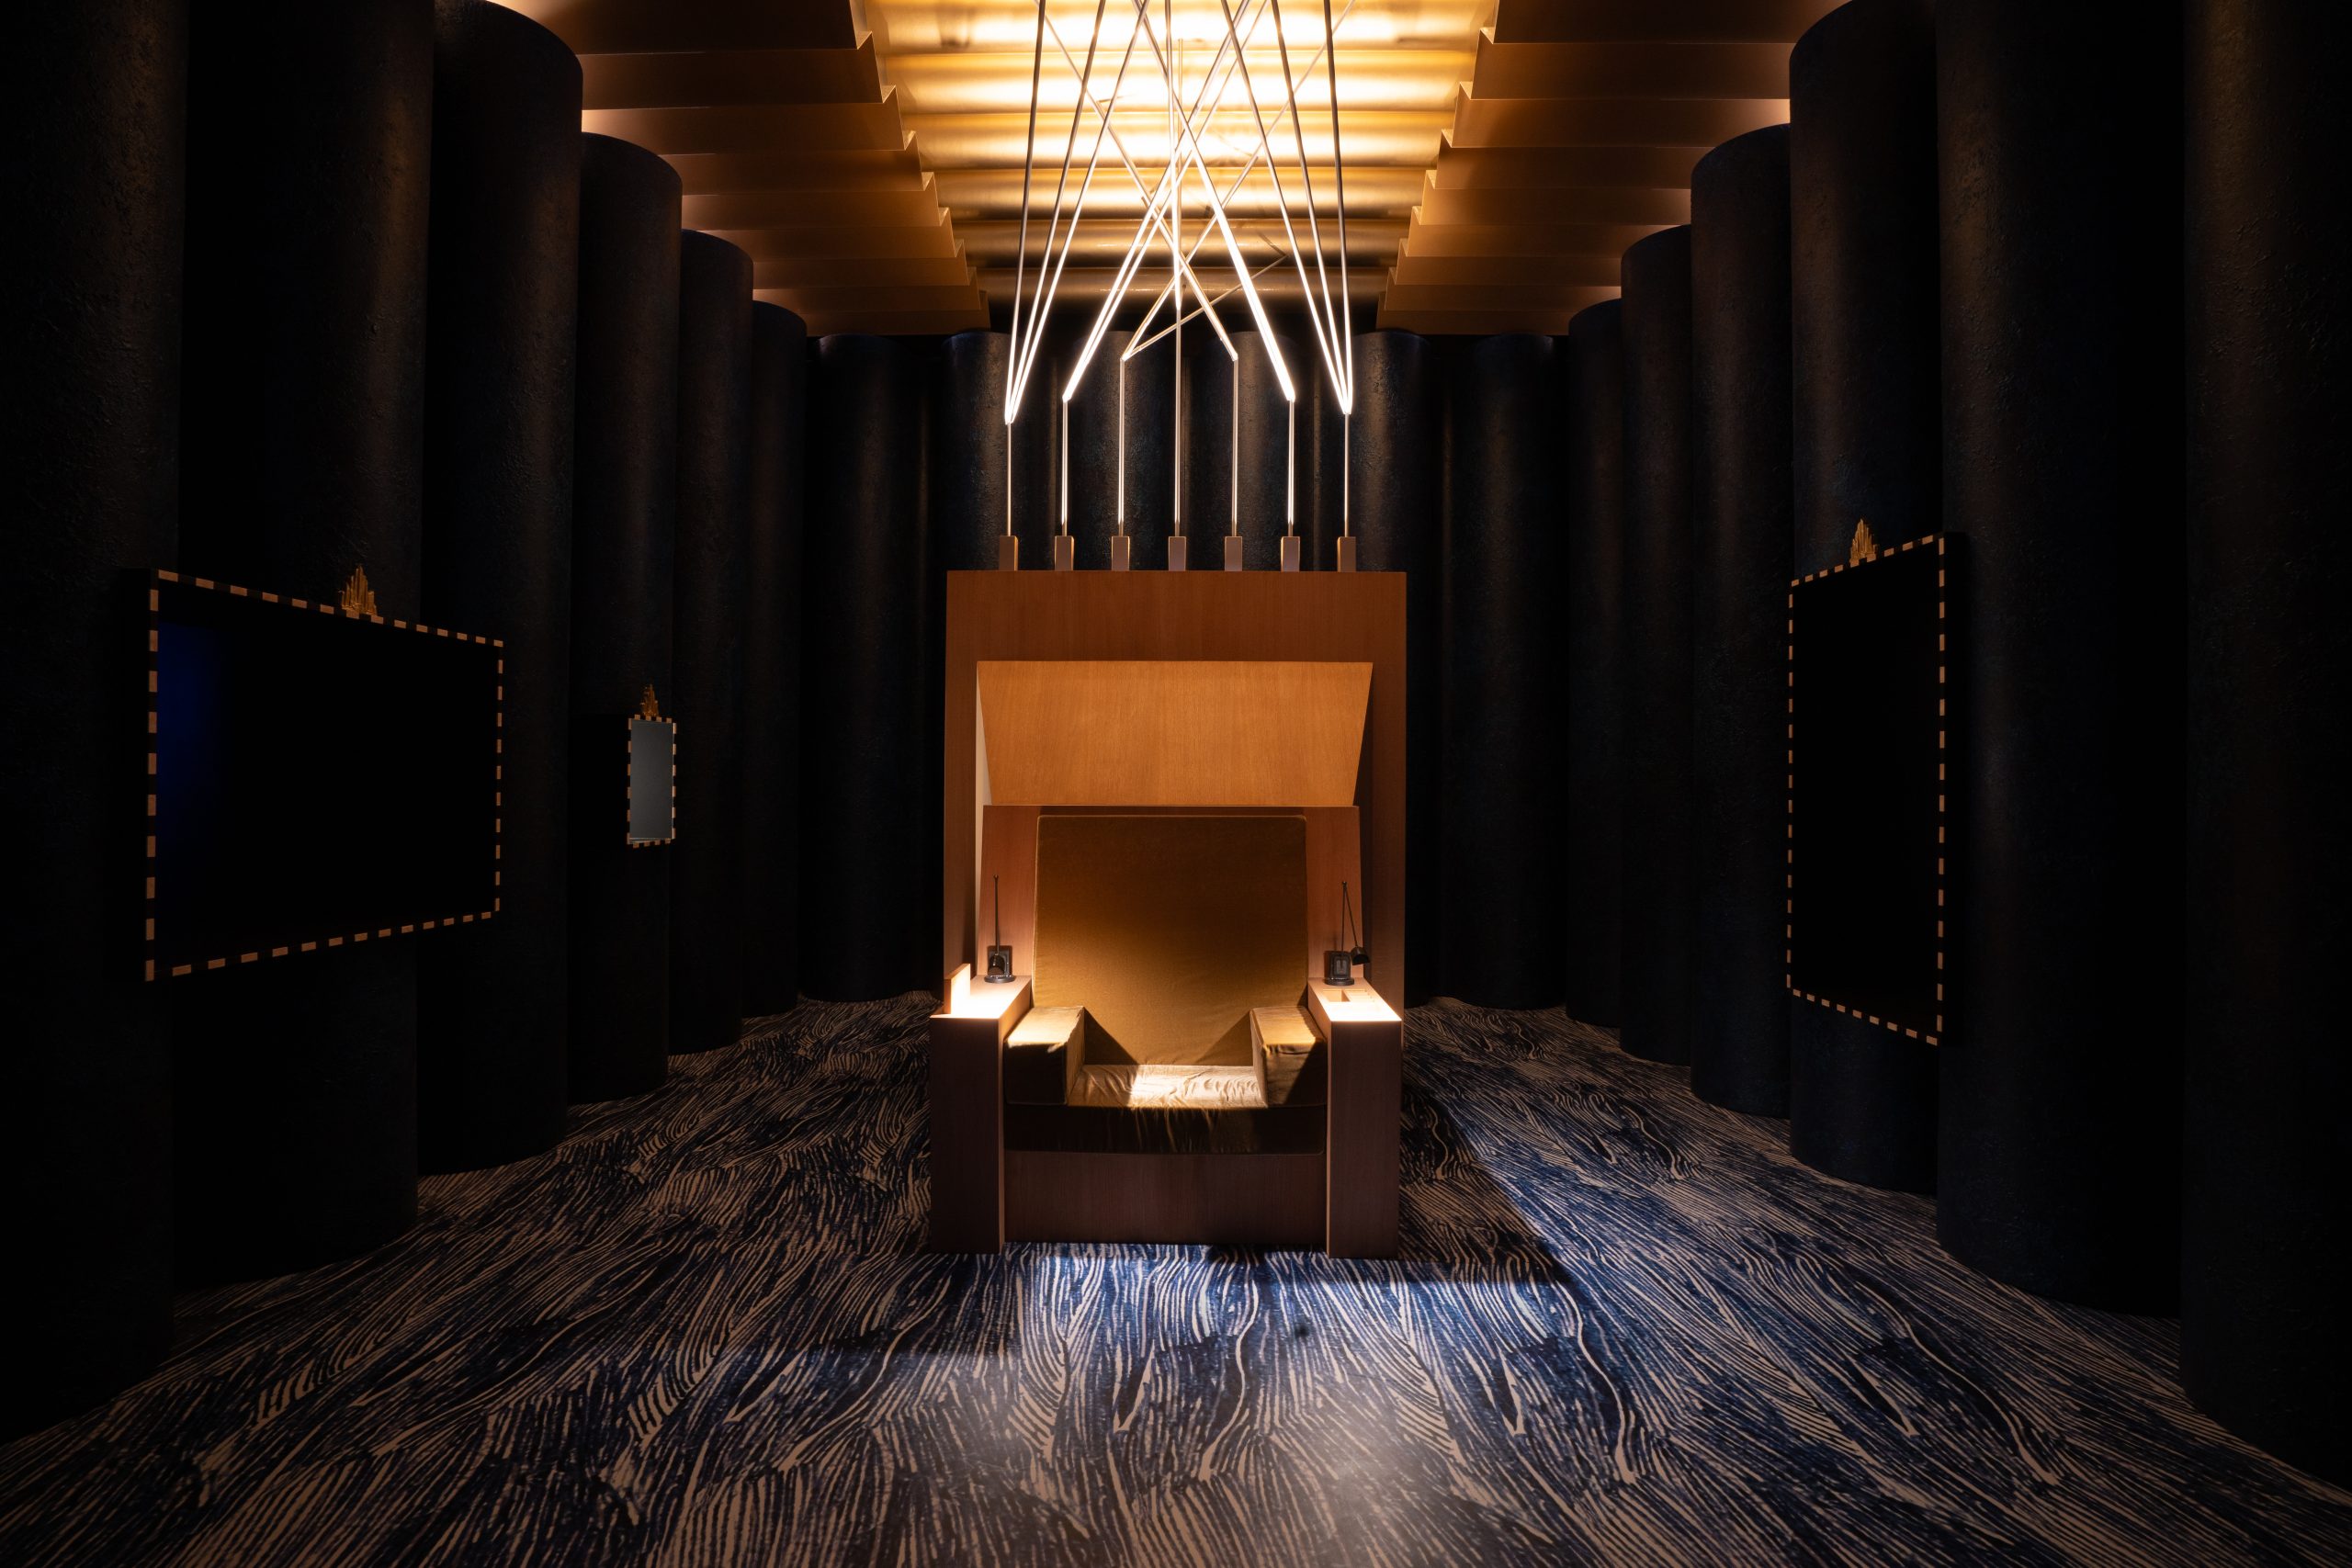 The interiors of the David Lynch installation at Milan Design Week